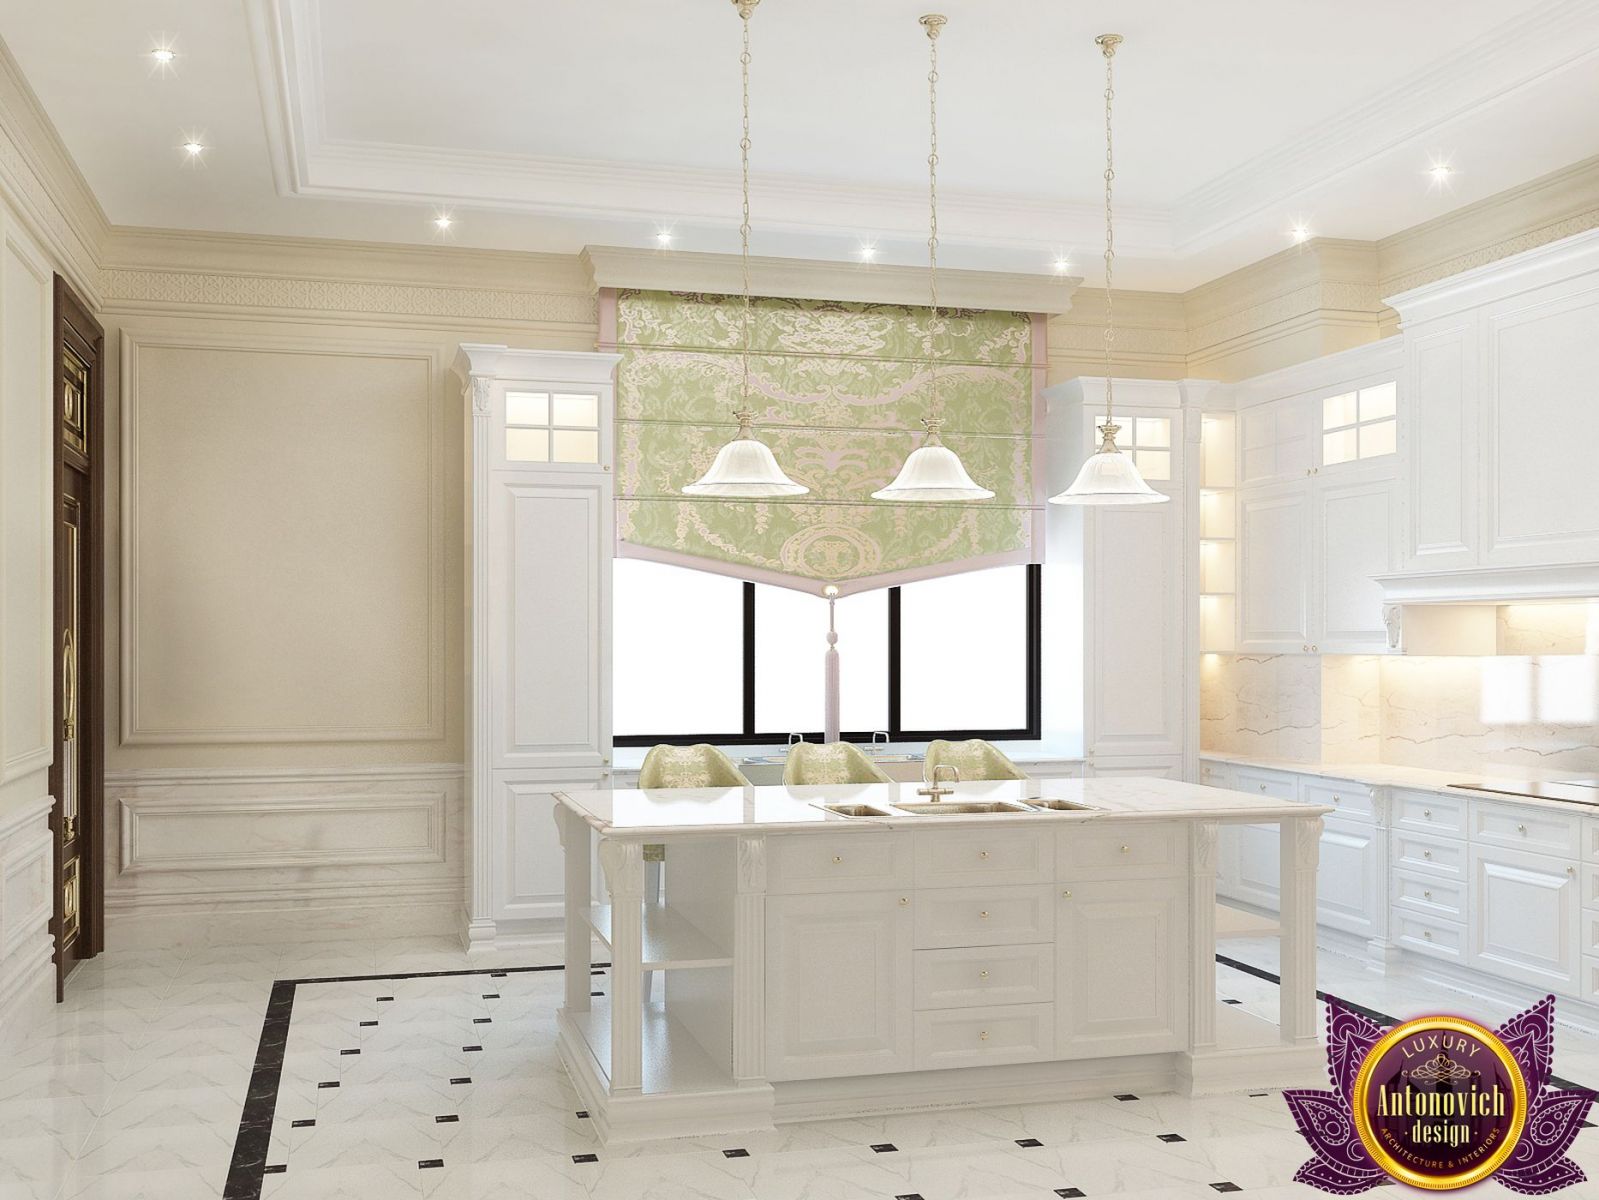 Extravagant kitchen design with chandelier by Antonovich Group